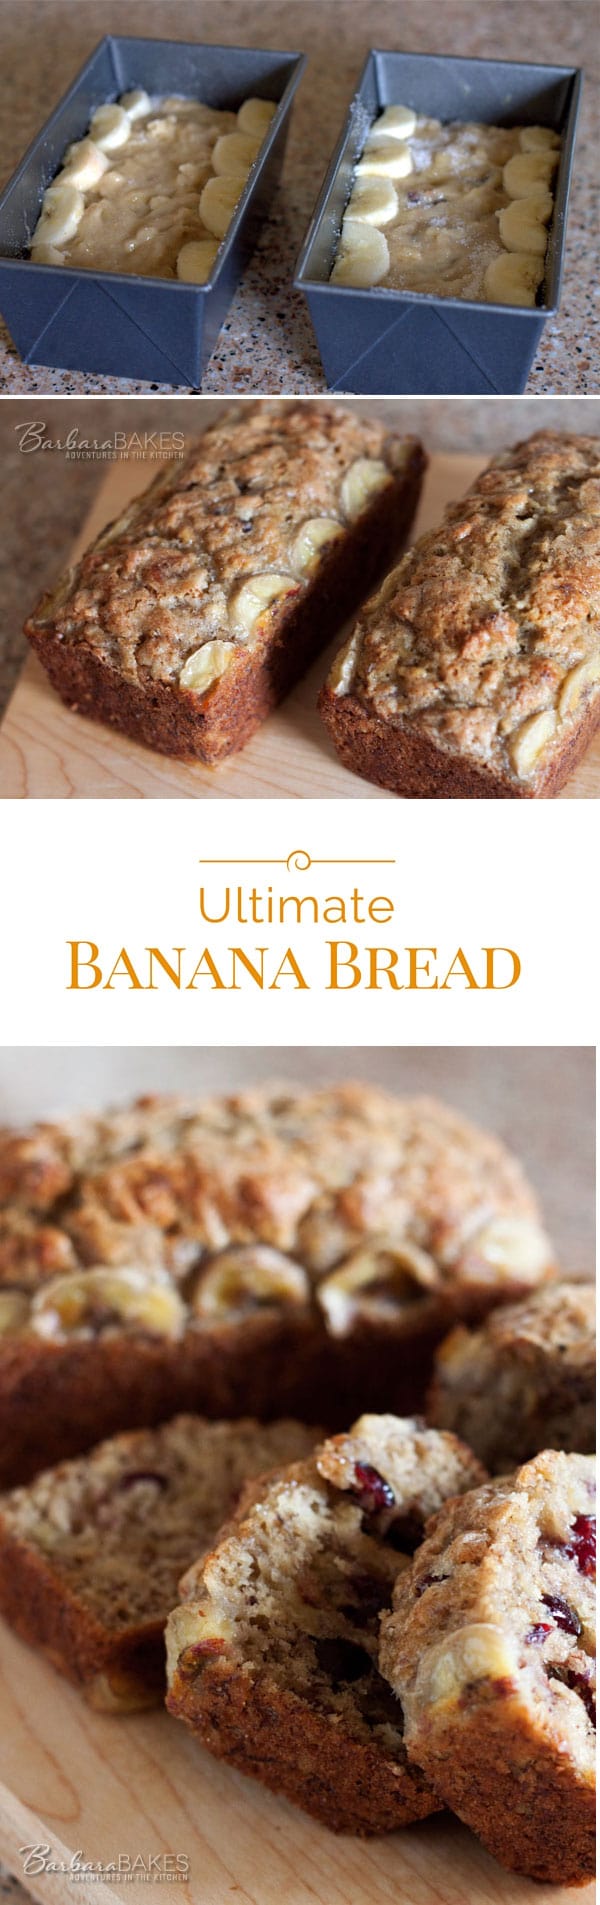 Ultimate-Banana-Bread-Collage-Barbara-Bakes